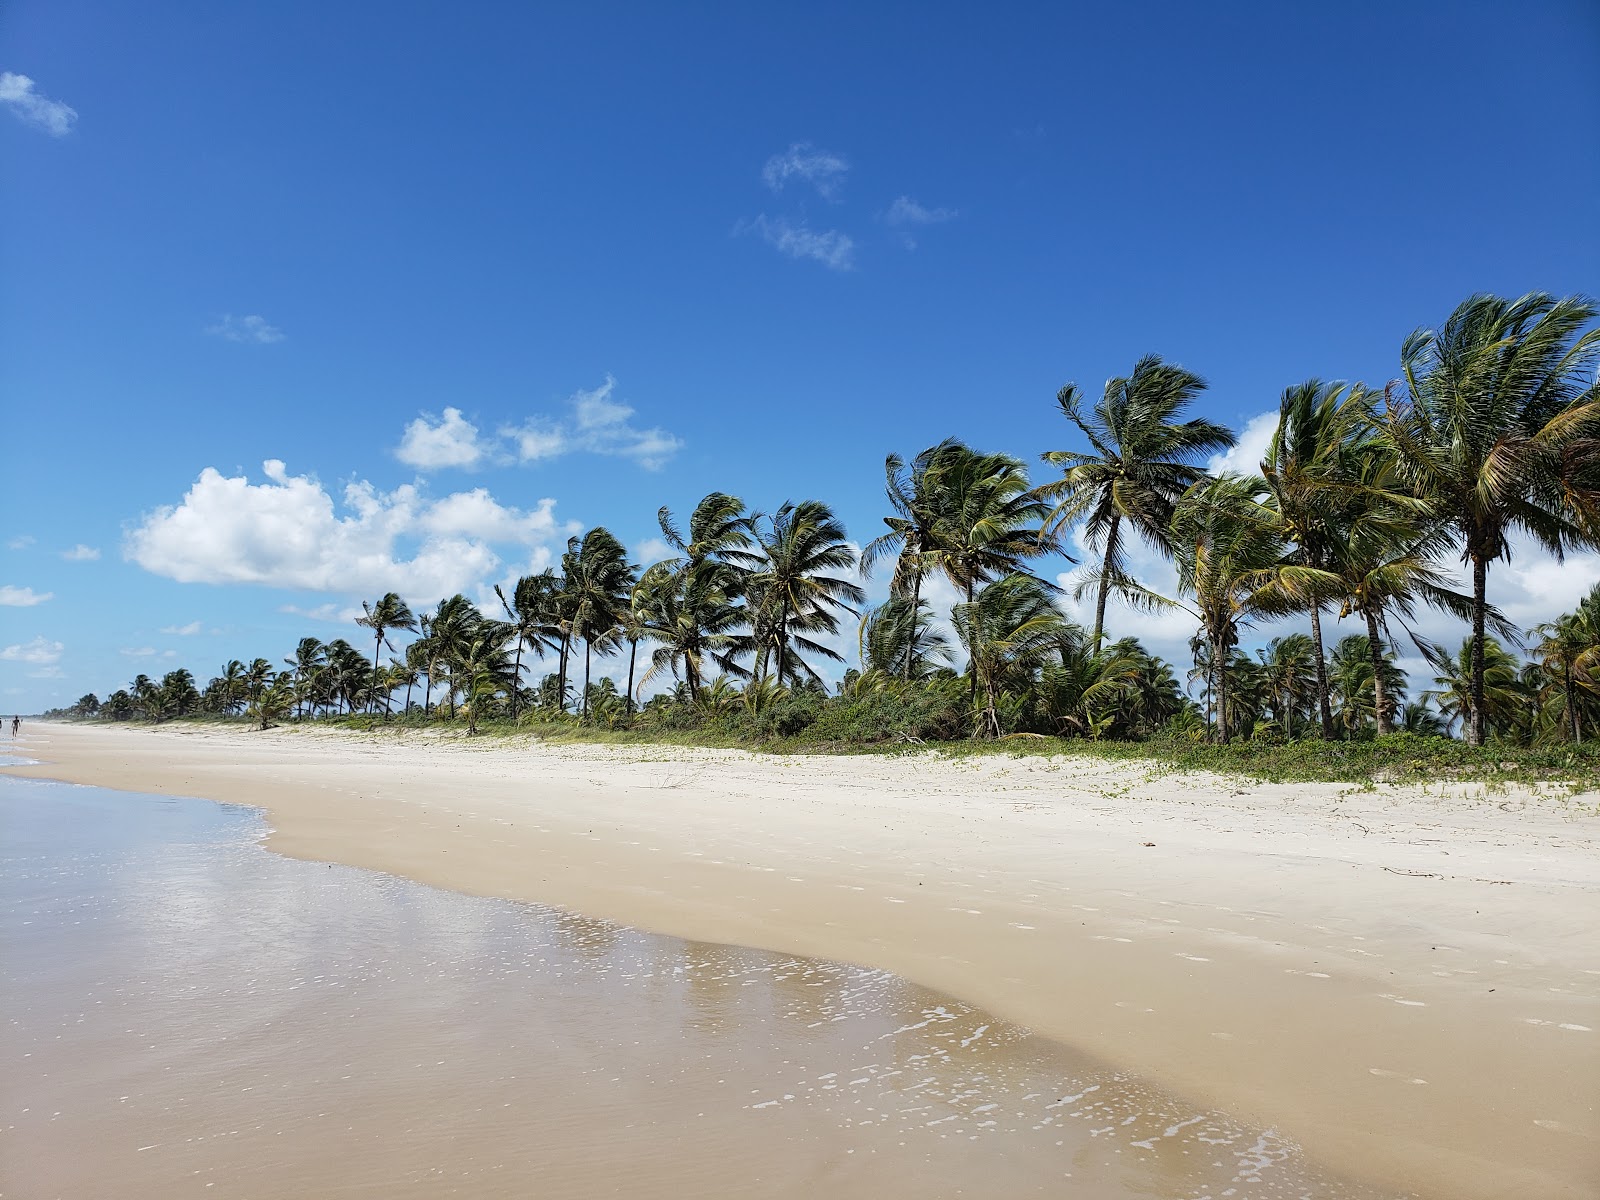 Photo of Ilha de Comandatuba Beach - popular place among relax connoisseurs